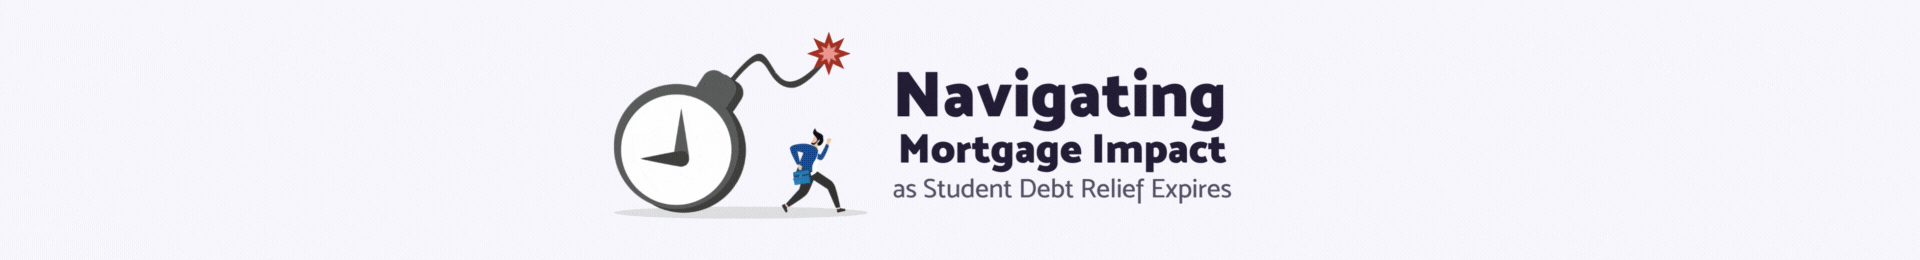 gfx_web_student-debt